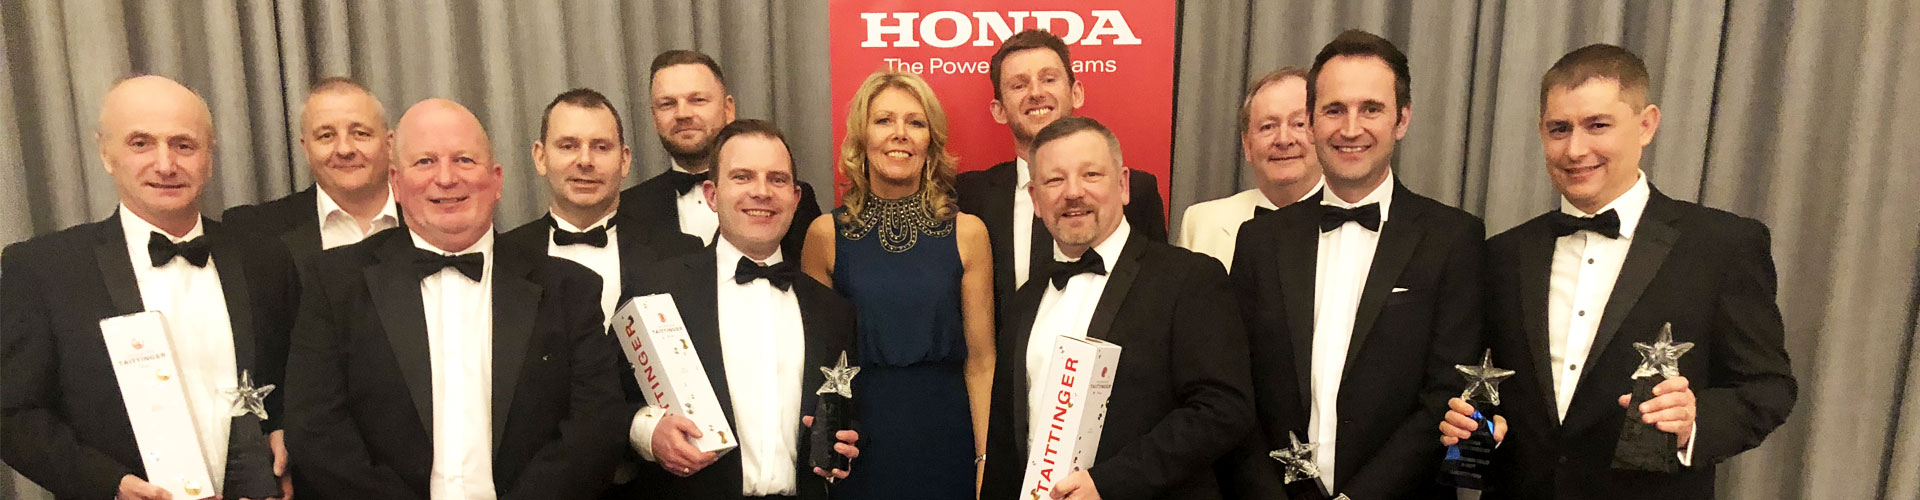 Cox Motor Group Cleans Up at The Honda UK Northern Dealer Awards